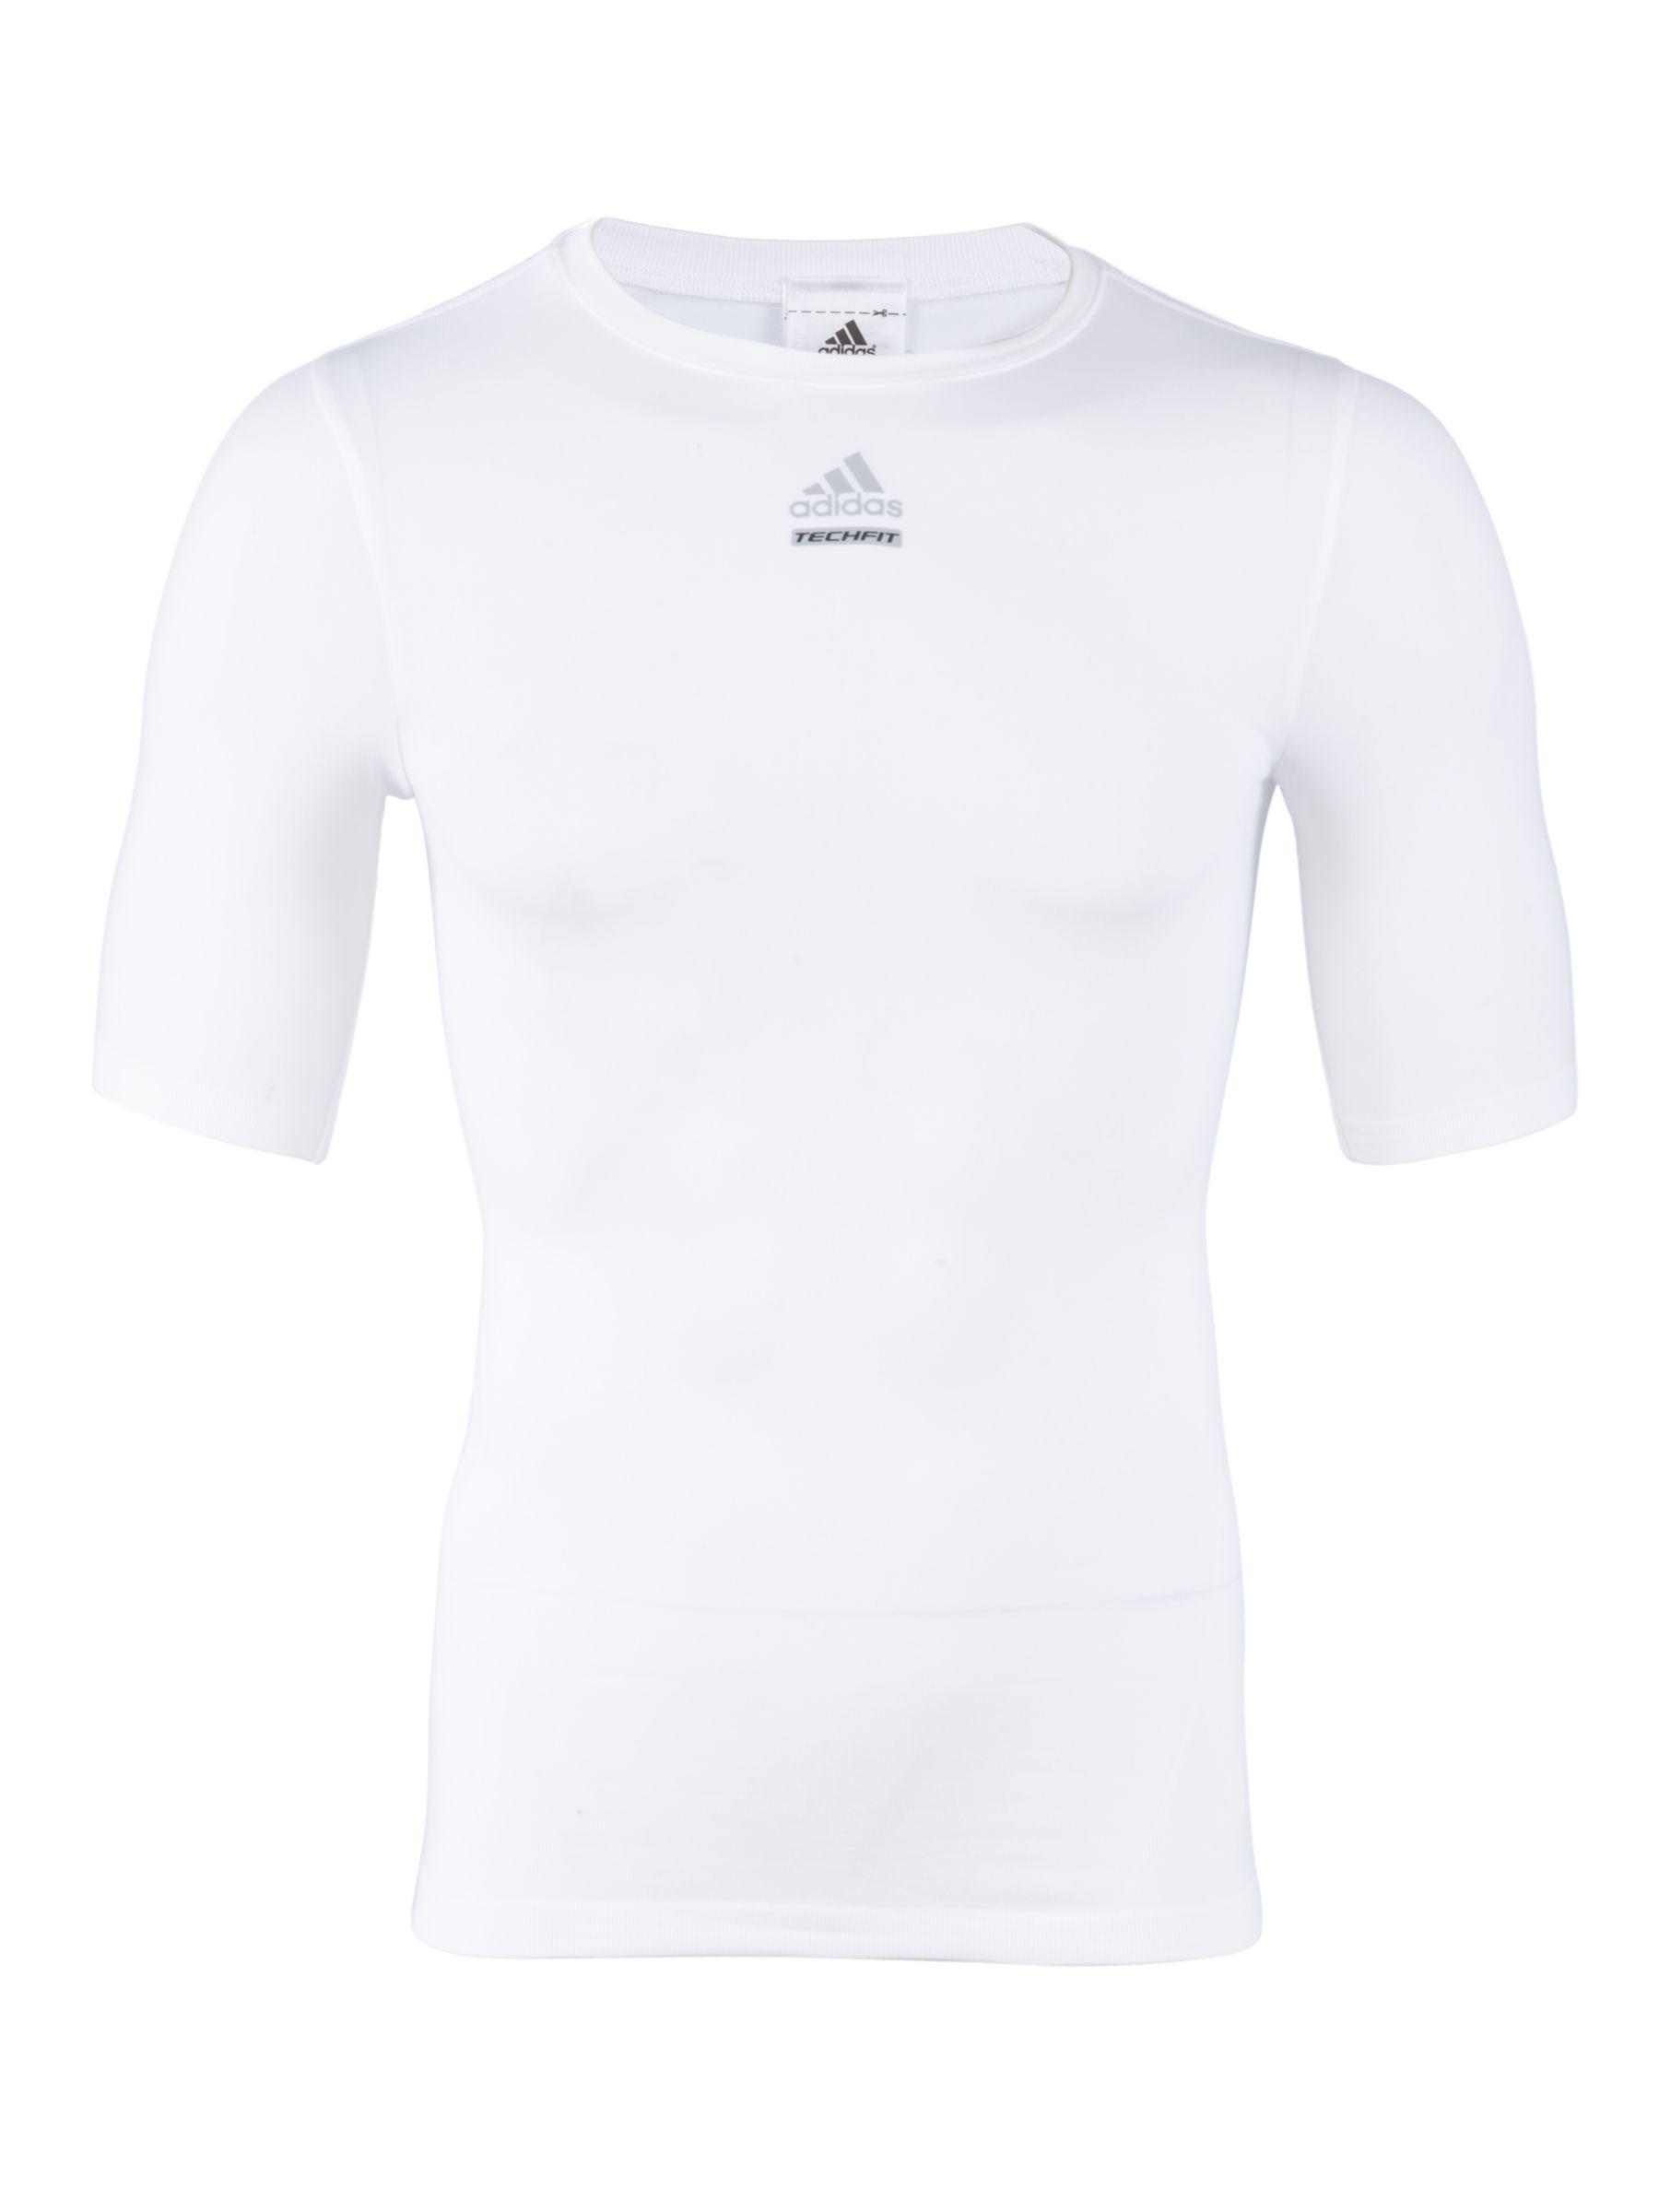 Adidas Techfit Short Sleeve T-Shirt, White